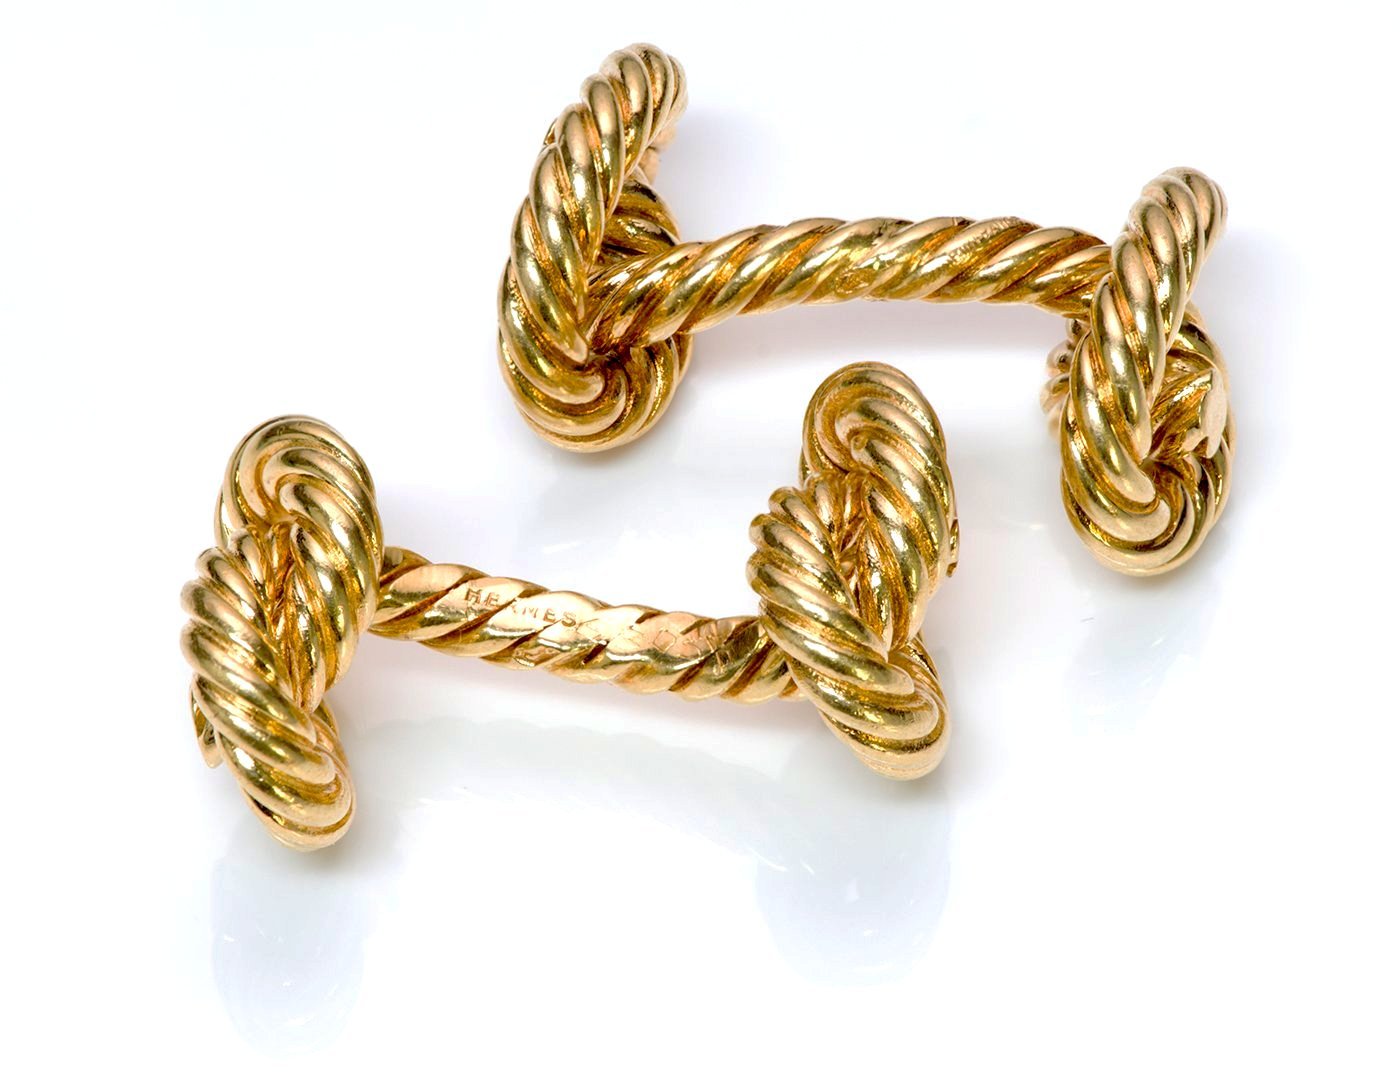 Hermès 18K Gold Twisted Rope Knot Cufflinks